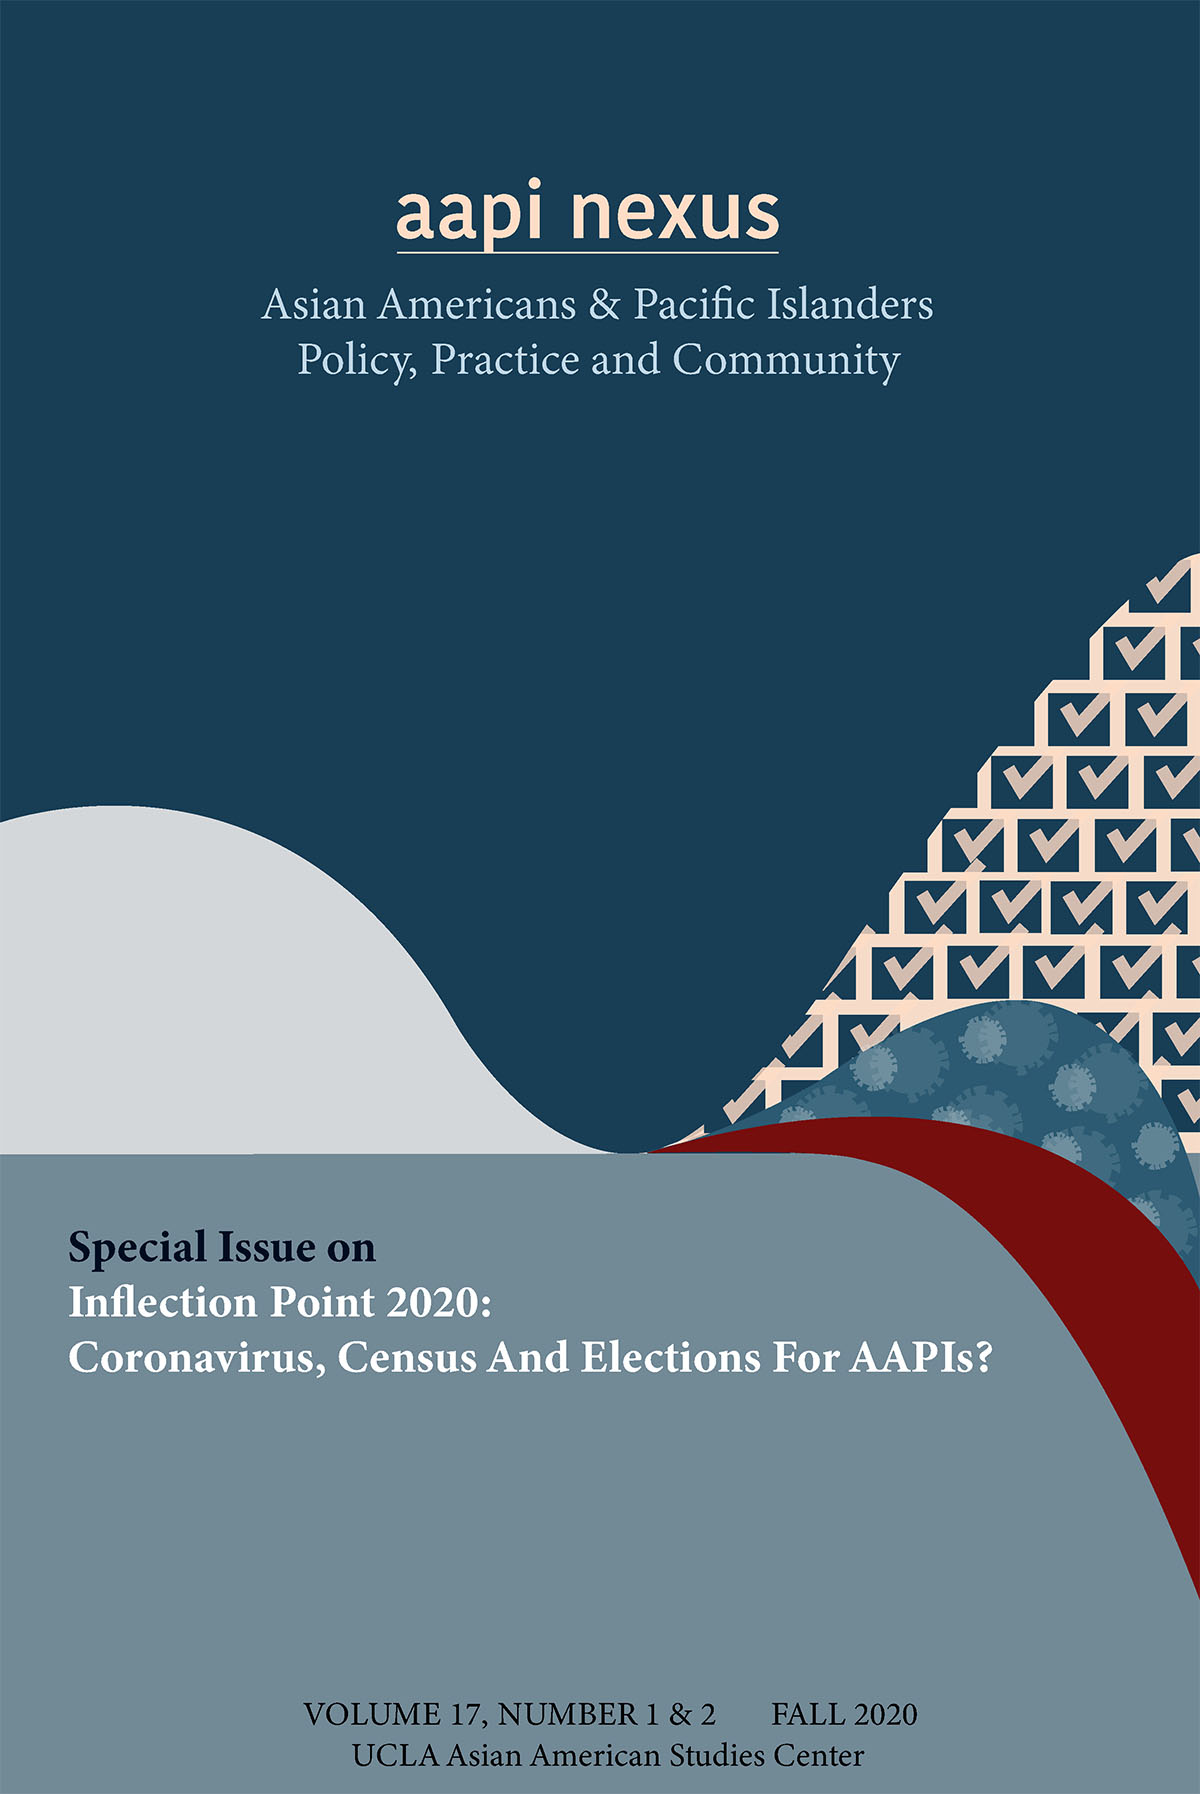 AAPI Nexus: Policy, Practice and Community